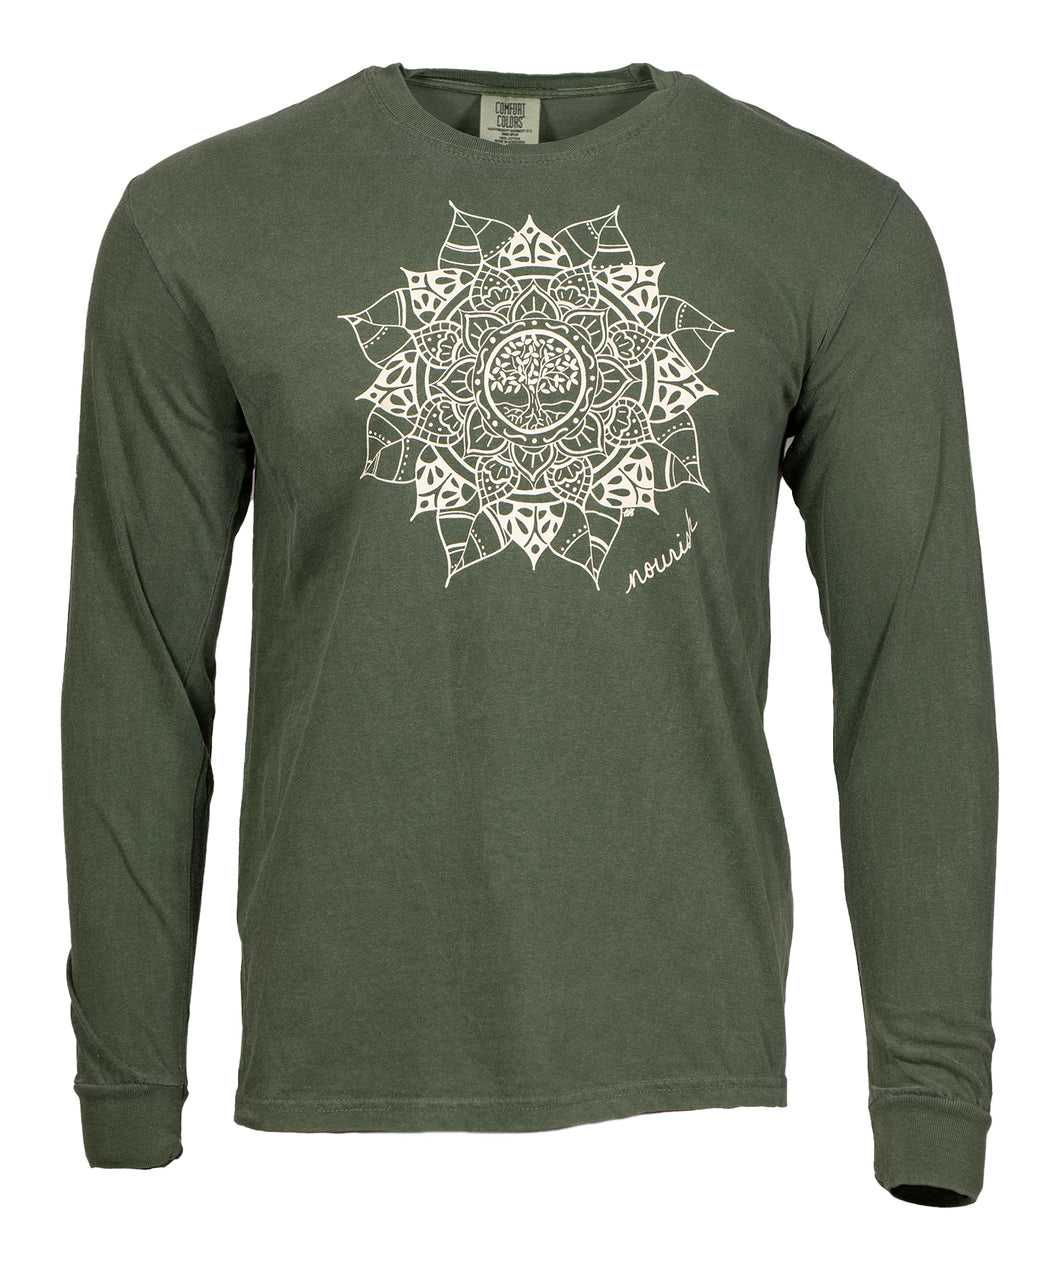 Unisex Cotton Long-Sleeved Tree Mandala T-shirt (provides 15 meals)